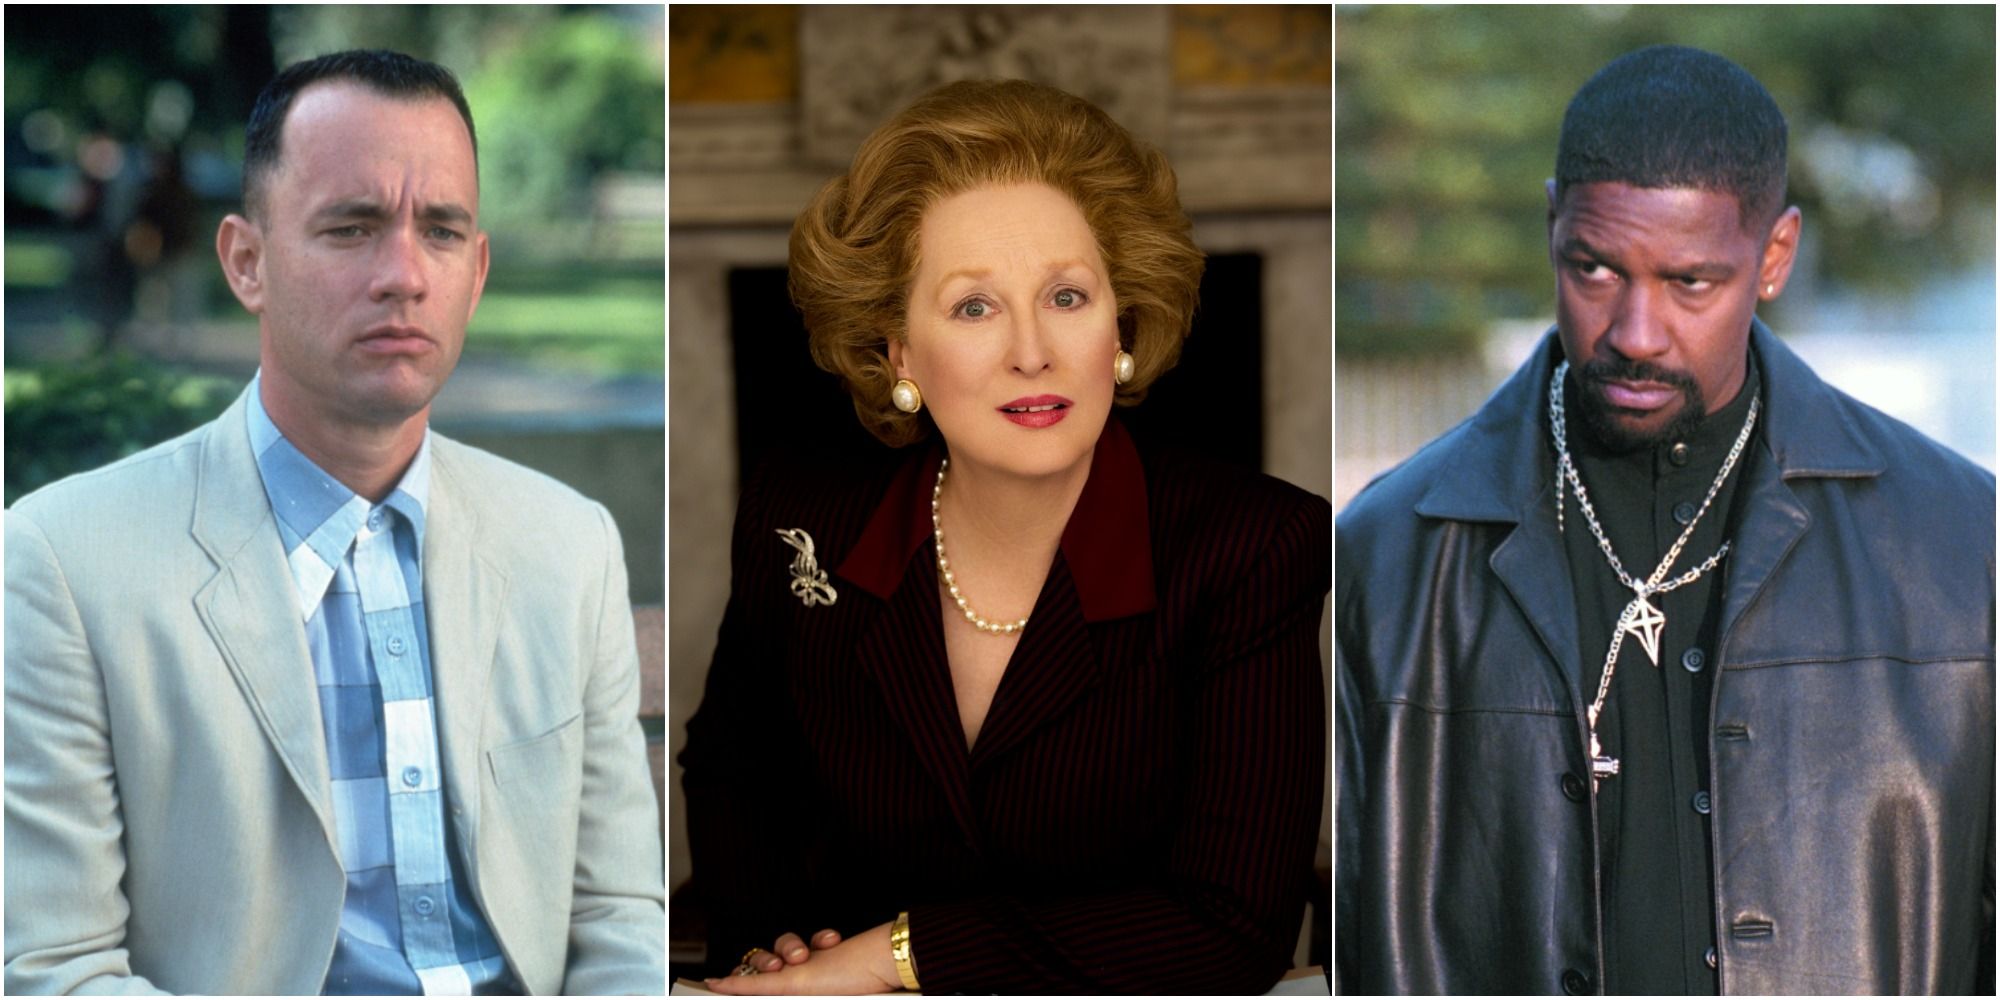 Tom Hanks, Meryl Streep and Denzel Washington